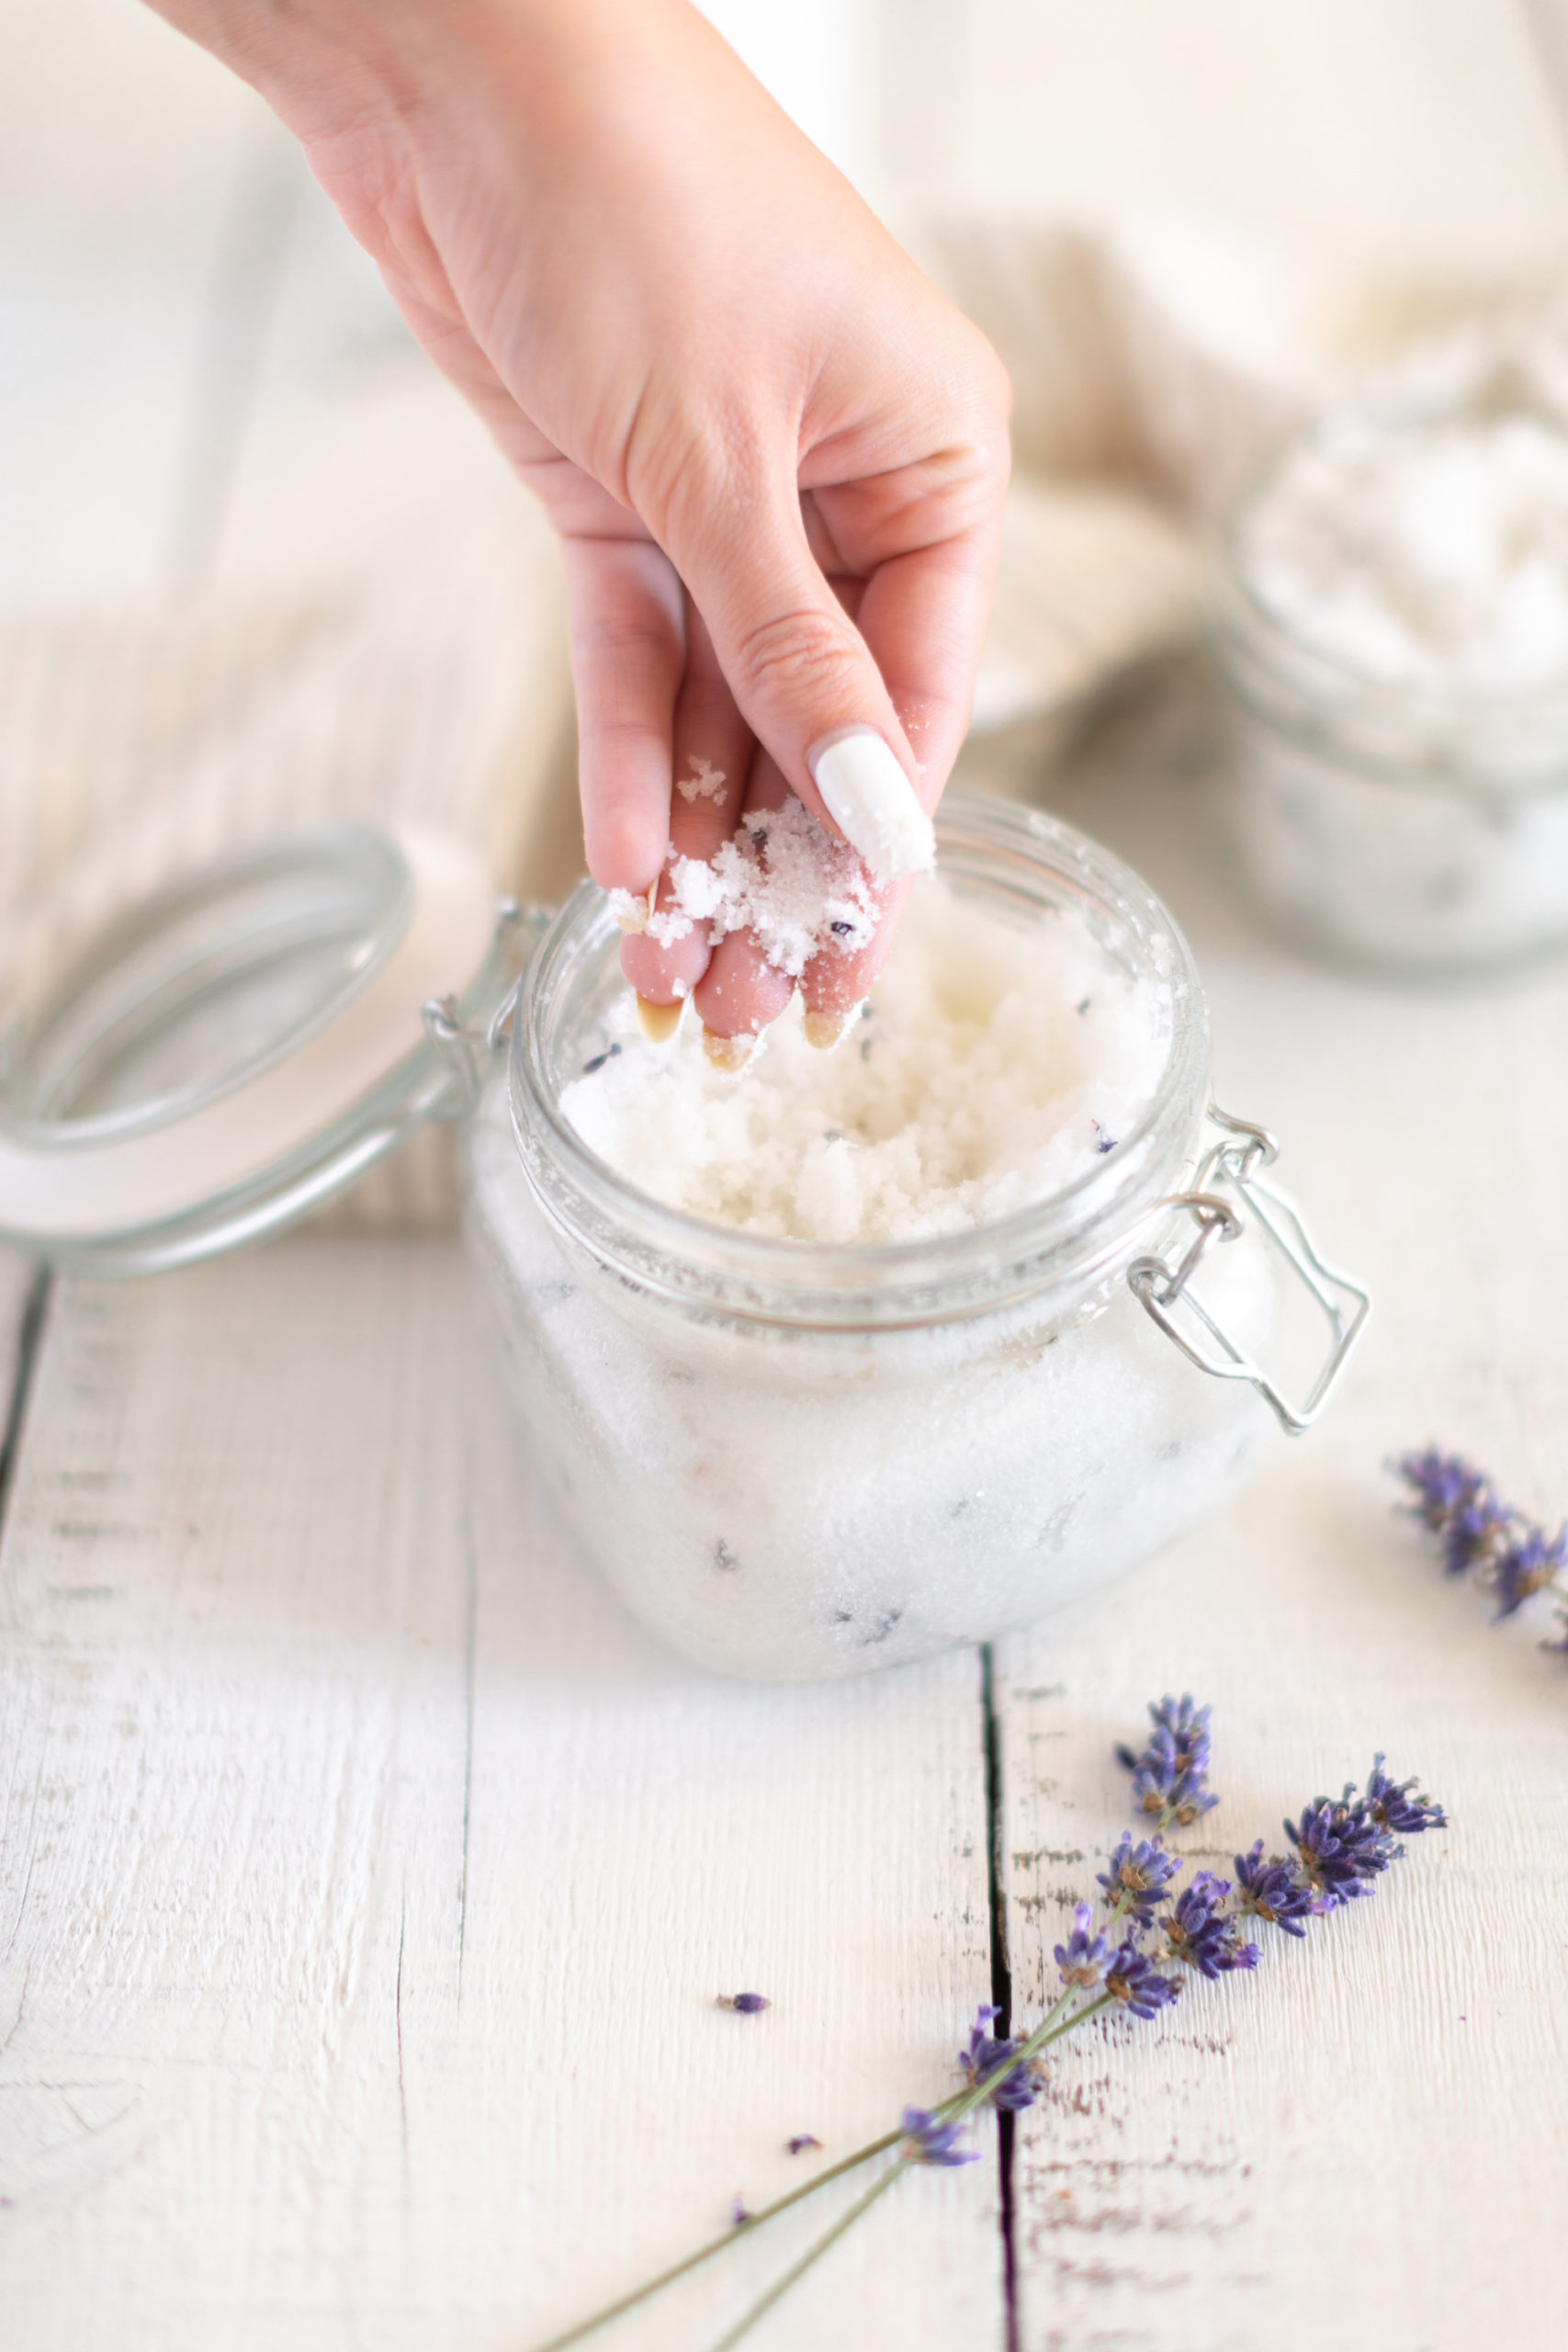 Homemade Lavender Foot Scrub Recipe